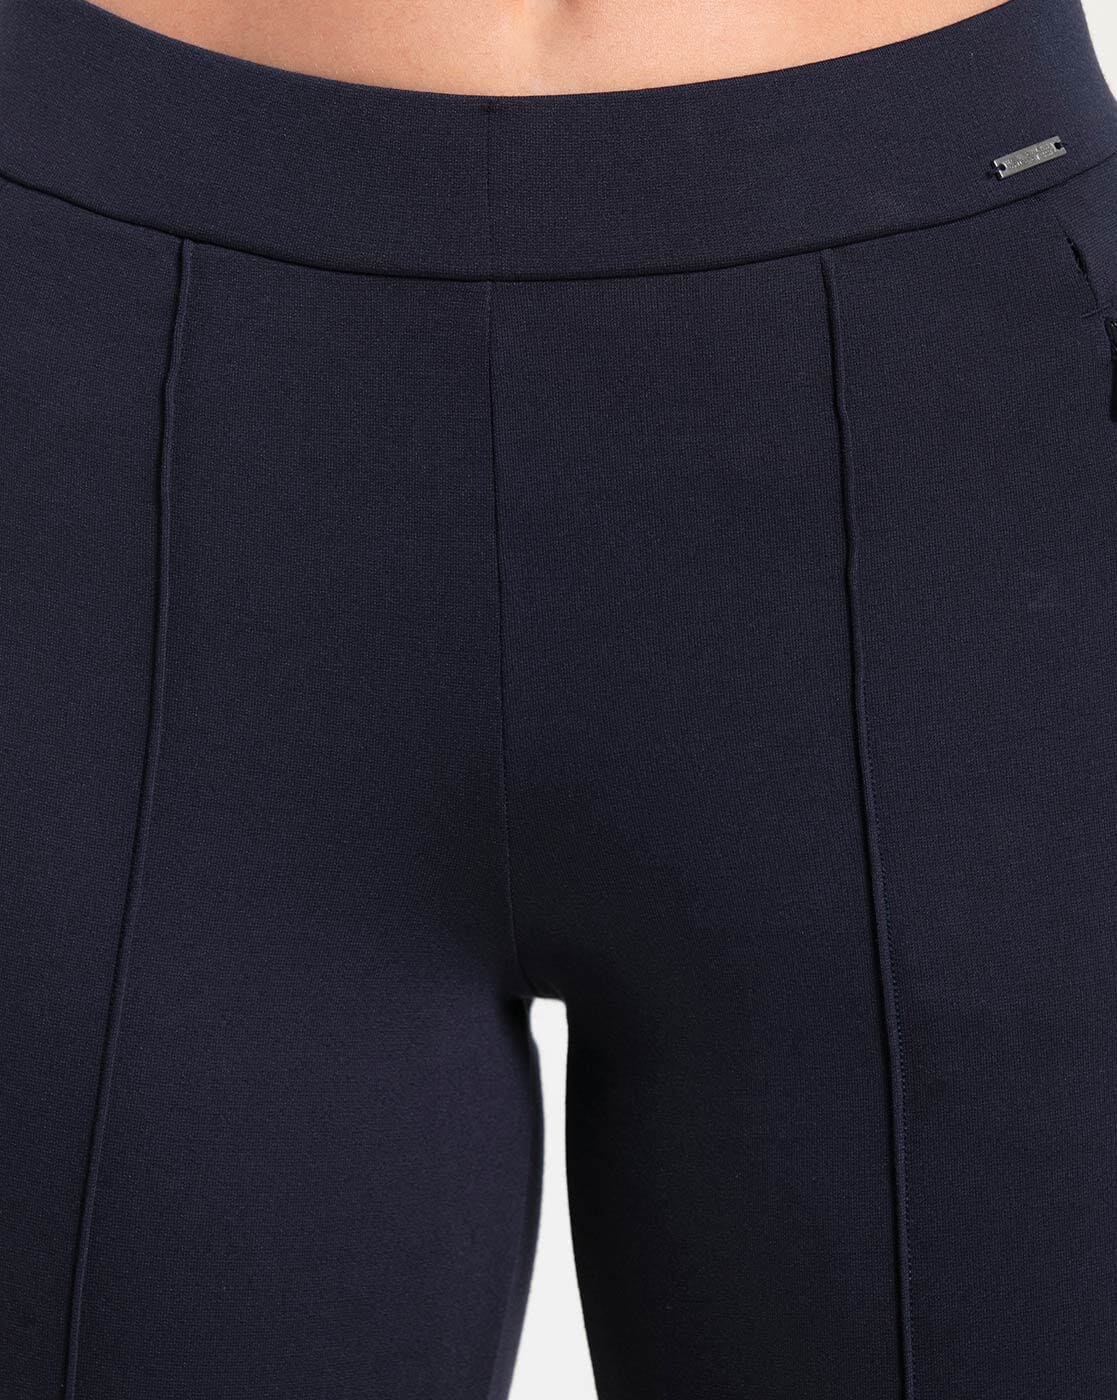 Jockey Women's Stretch Fleece Pocket Legging in Neo Navy, Size M - NWT